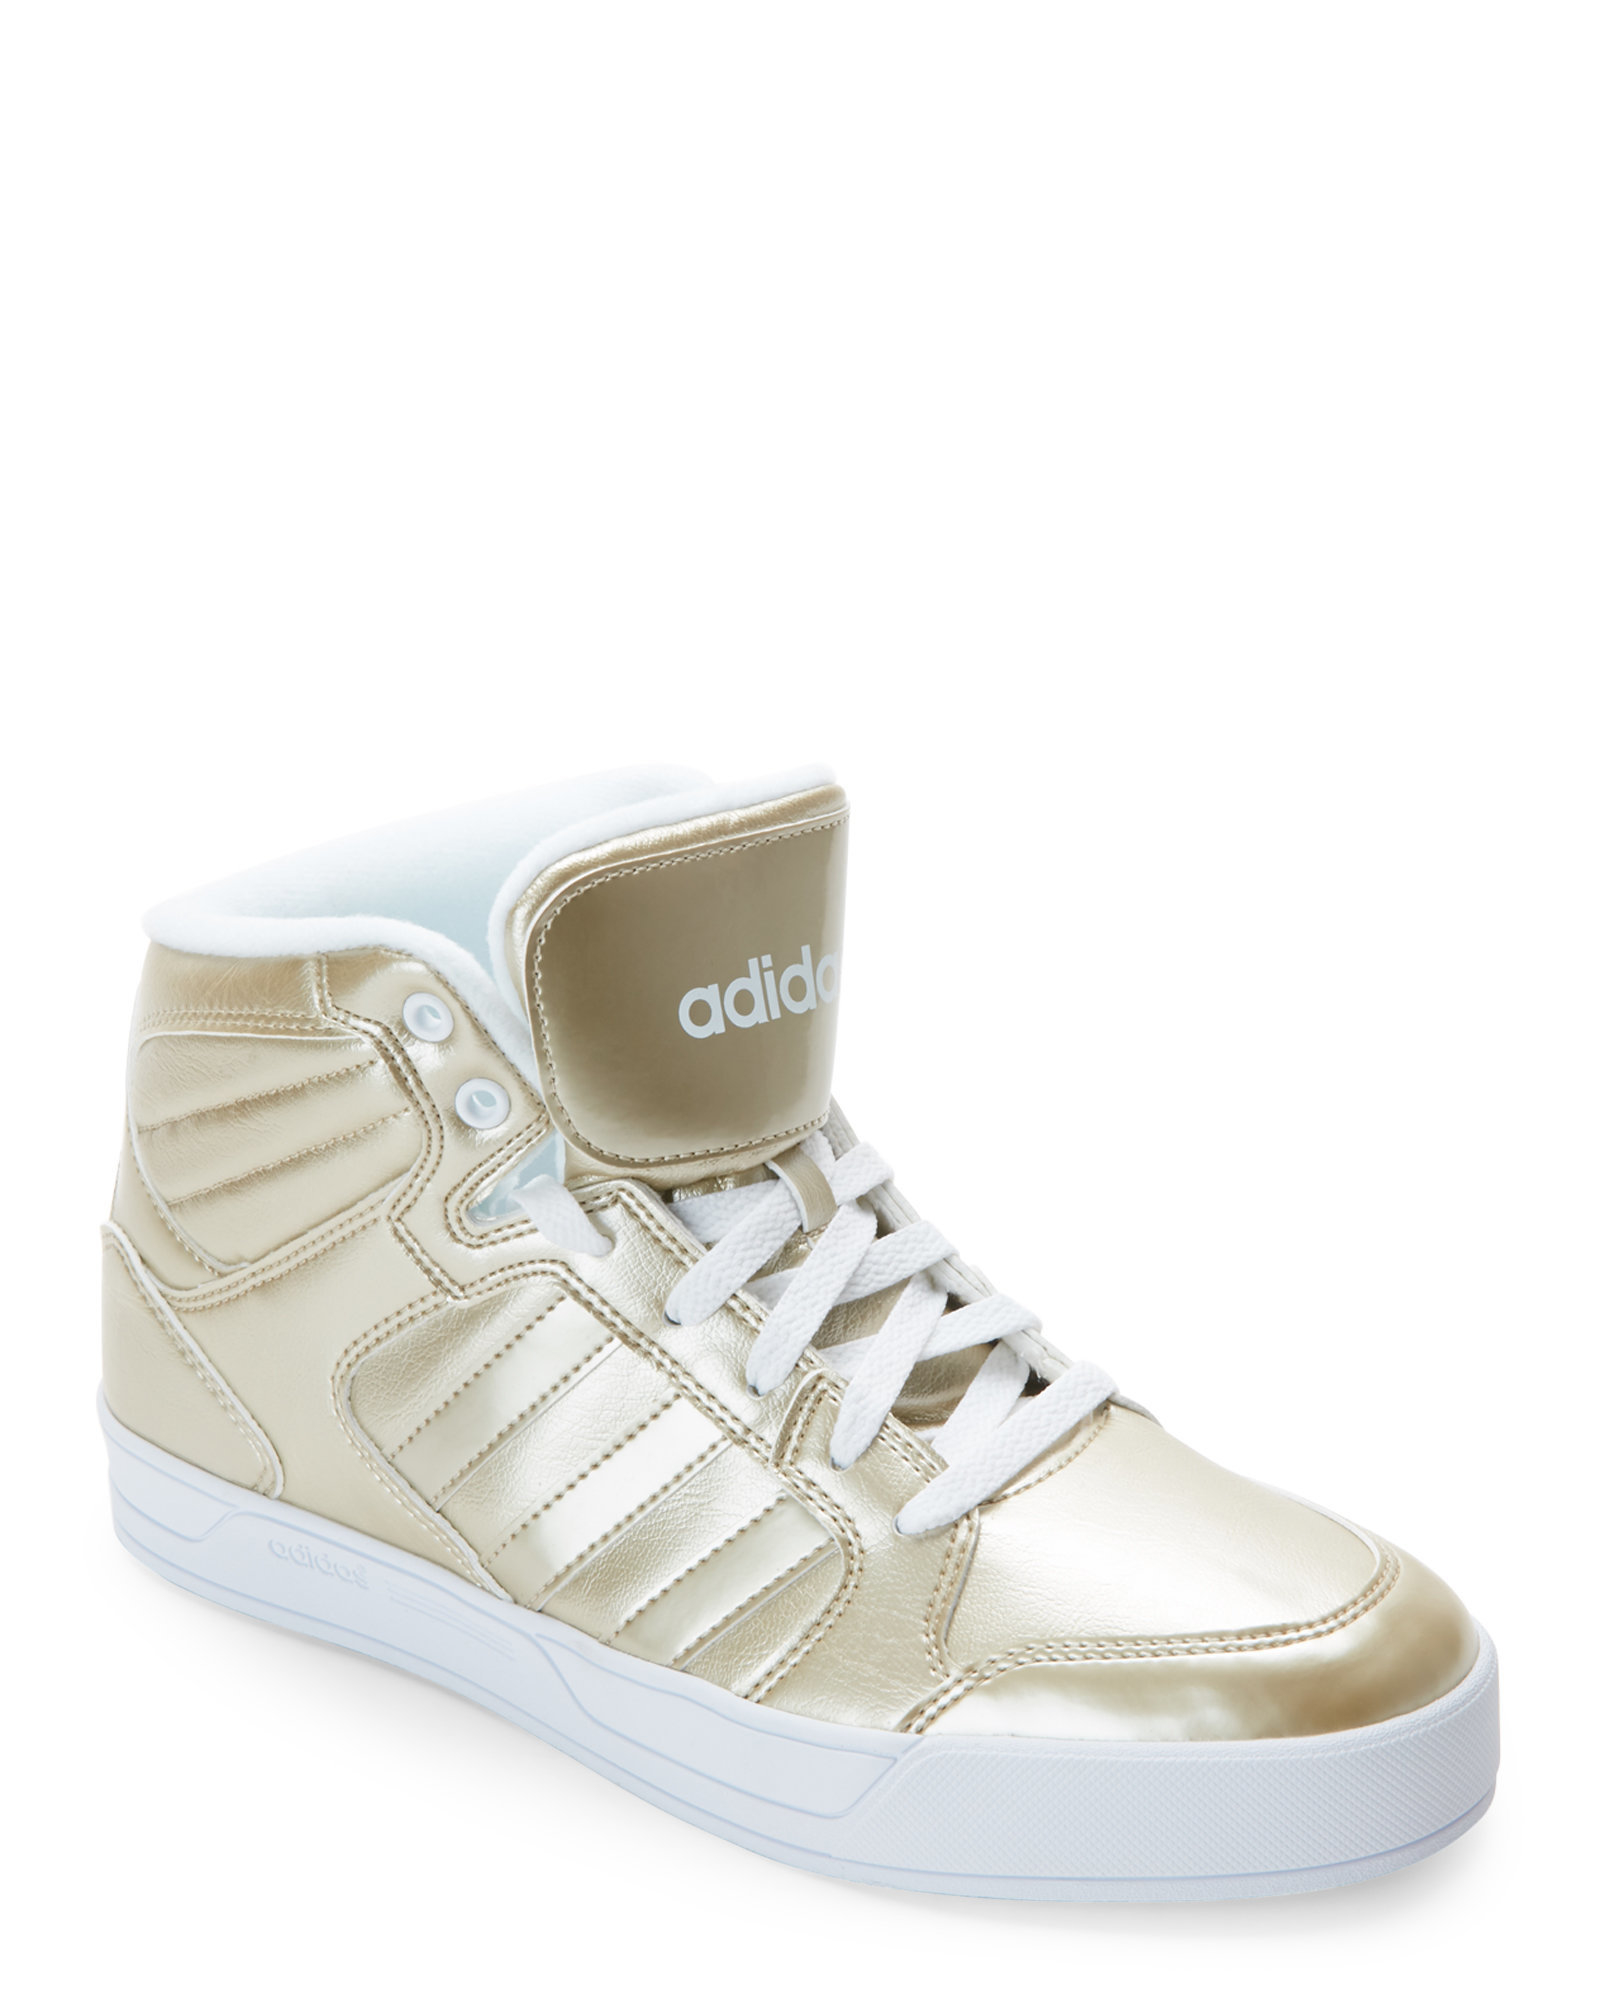 adidas Originals Gold Neo Raleigh Mid Sneakers in Metallic - Lyst